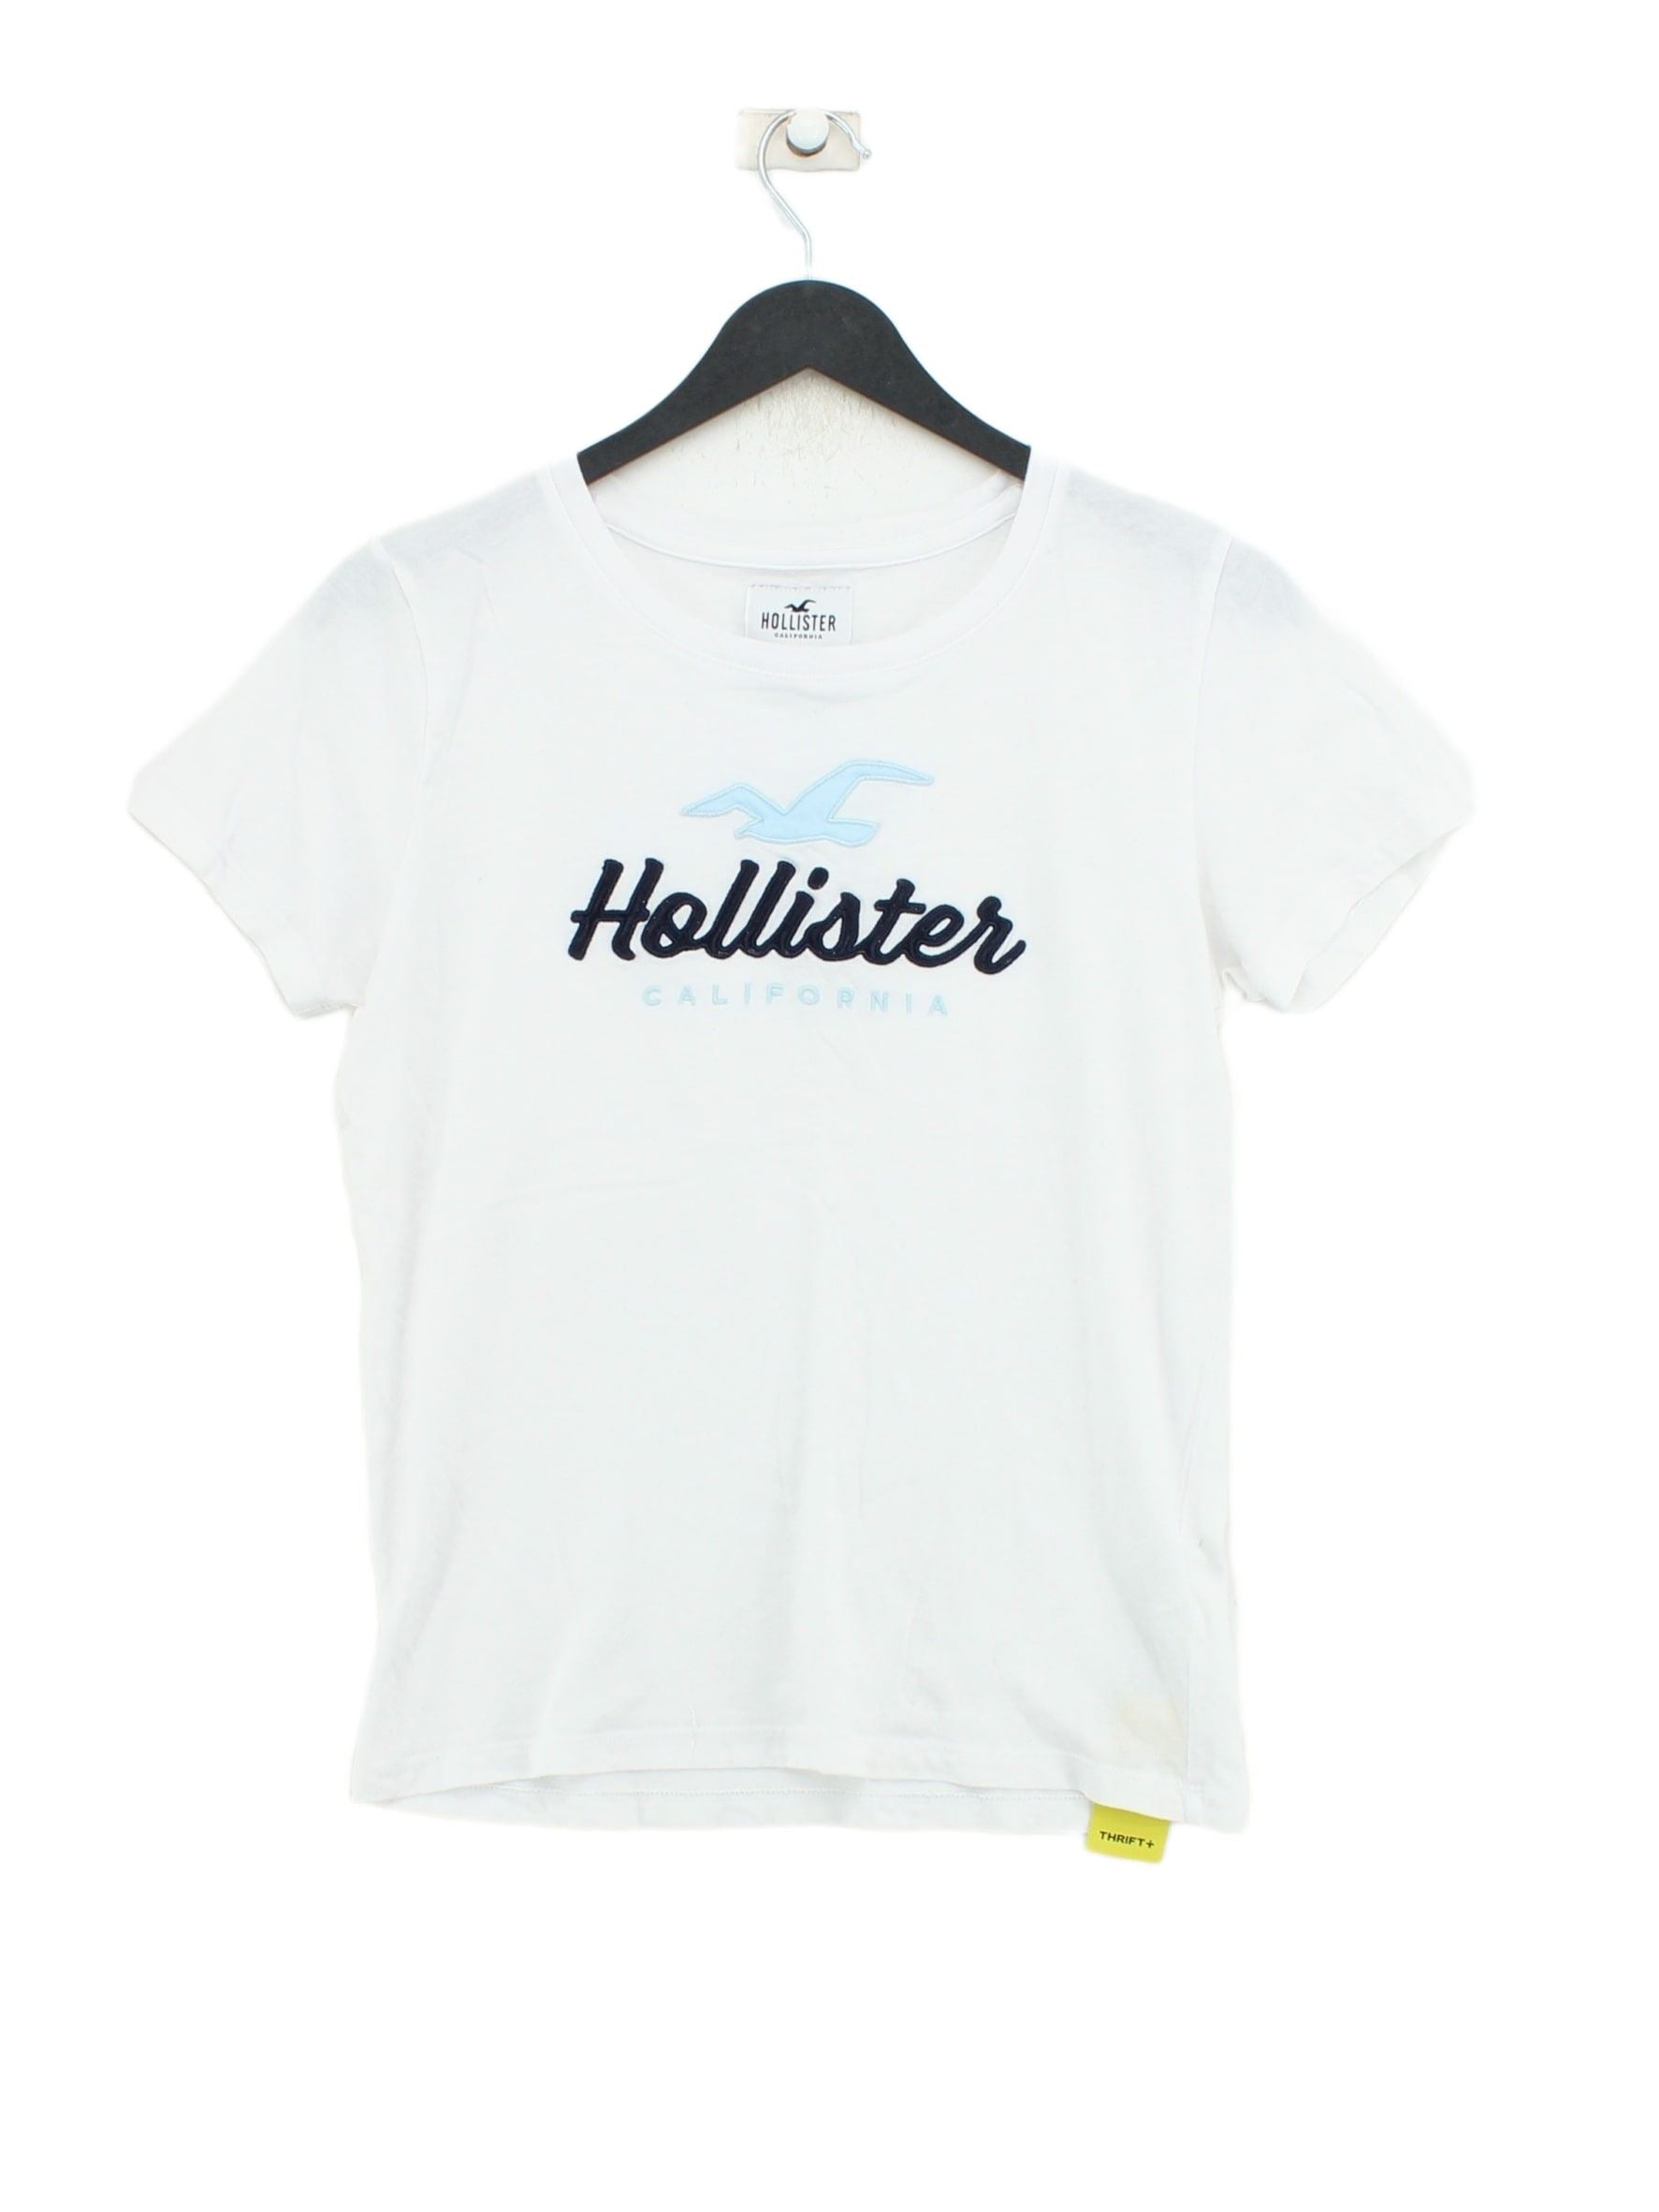 Hollister Women's T-Shirt S White 100% Cotton